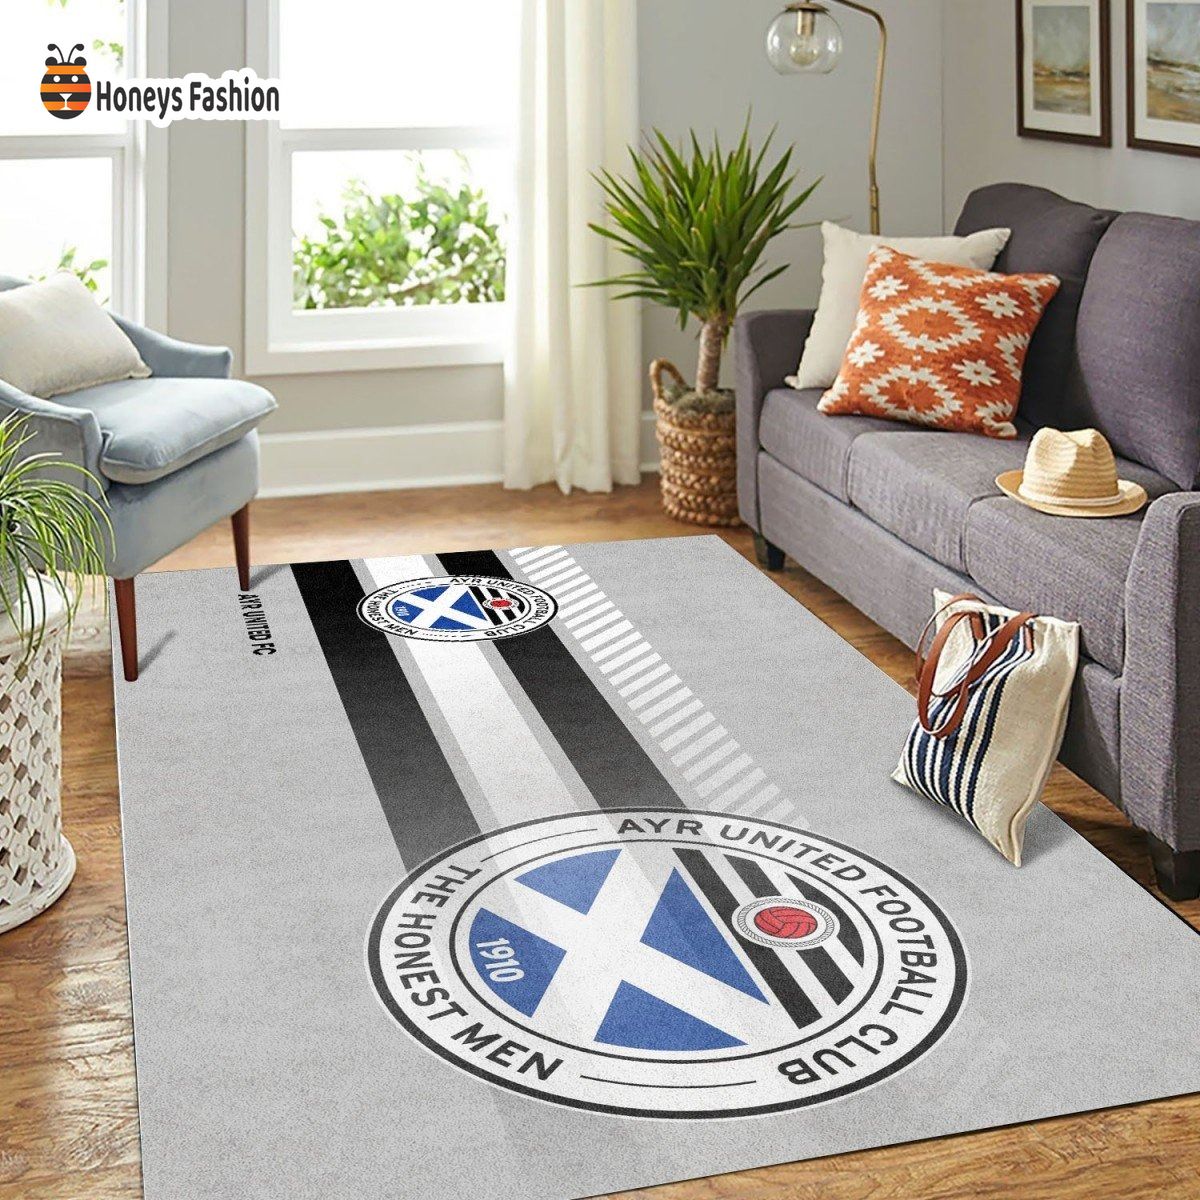 Ayr United F.C Rug Carpet